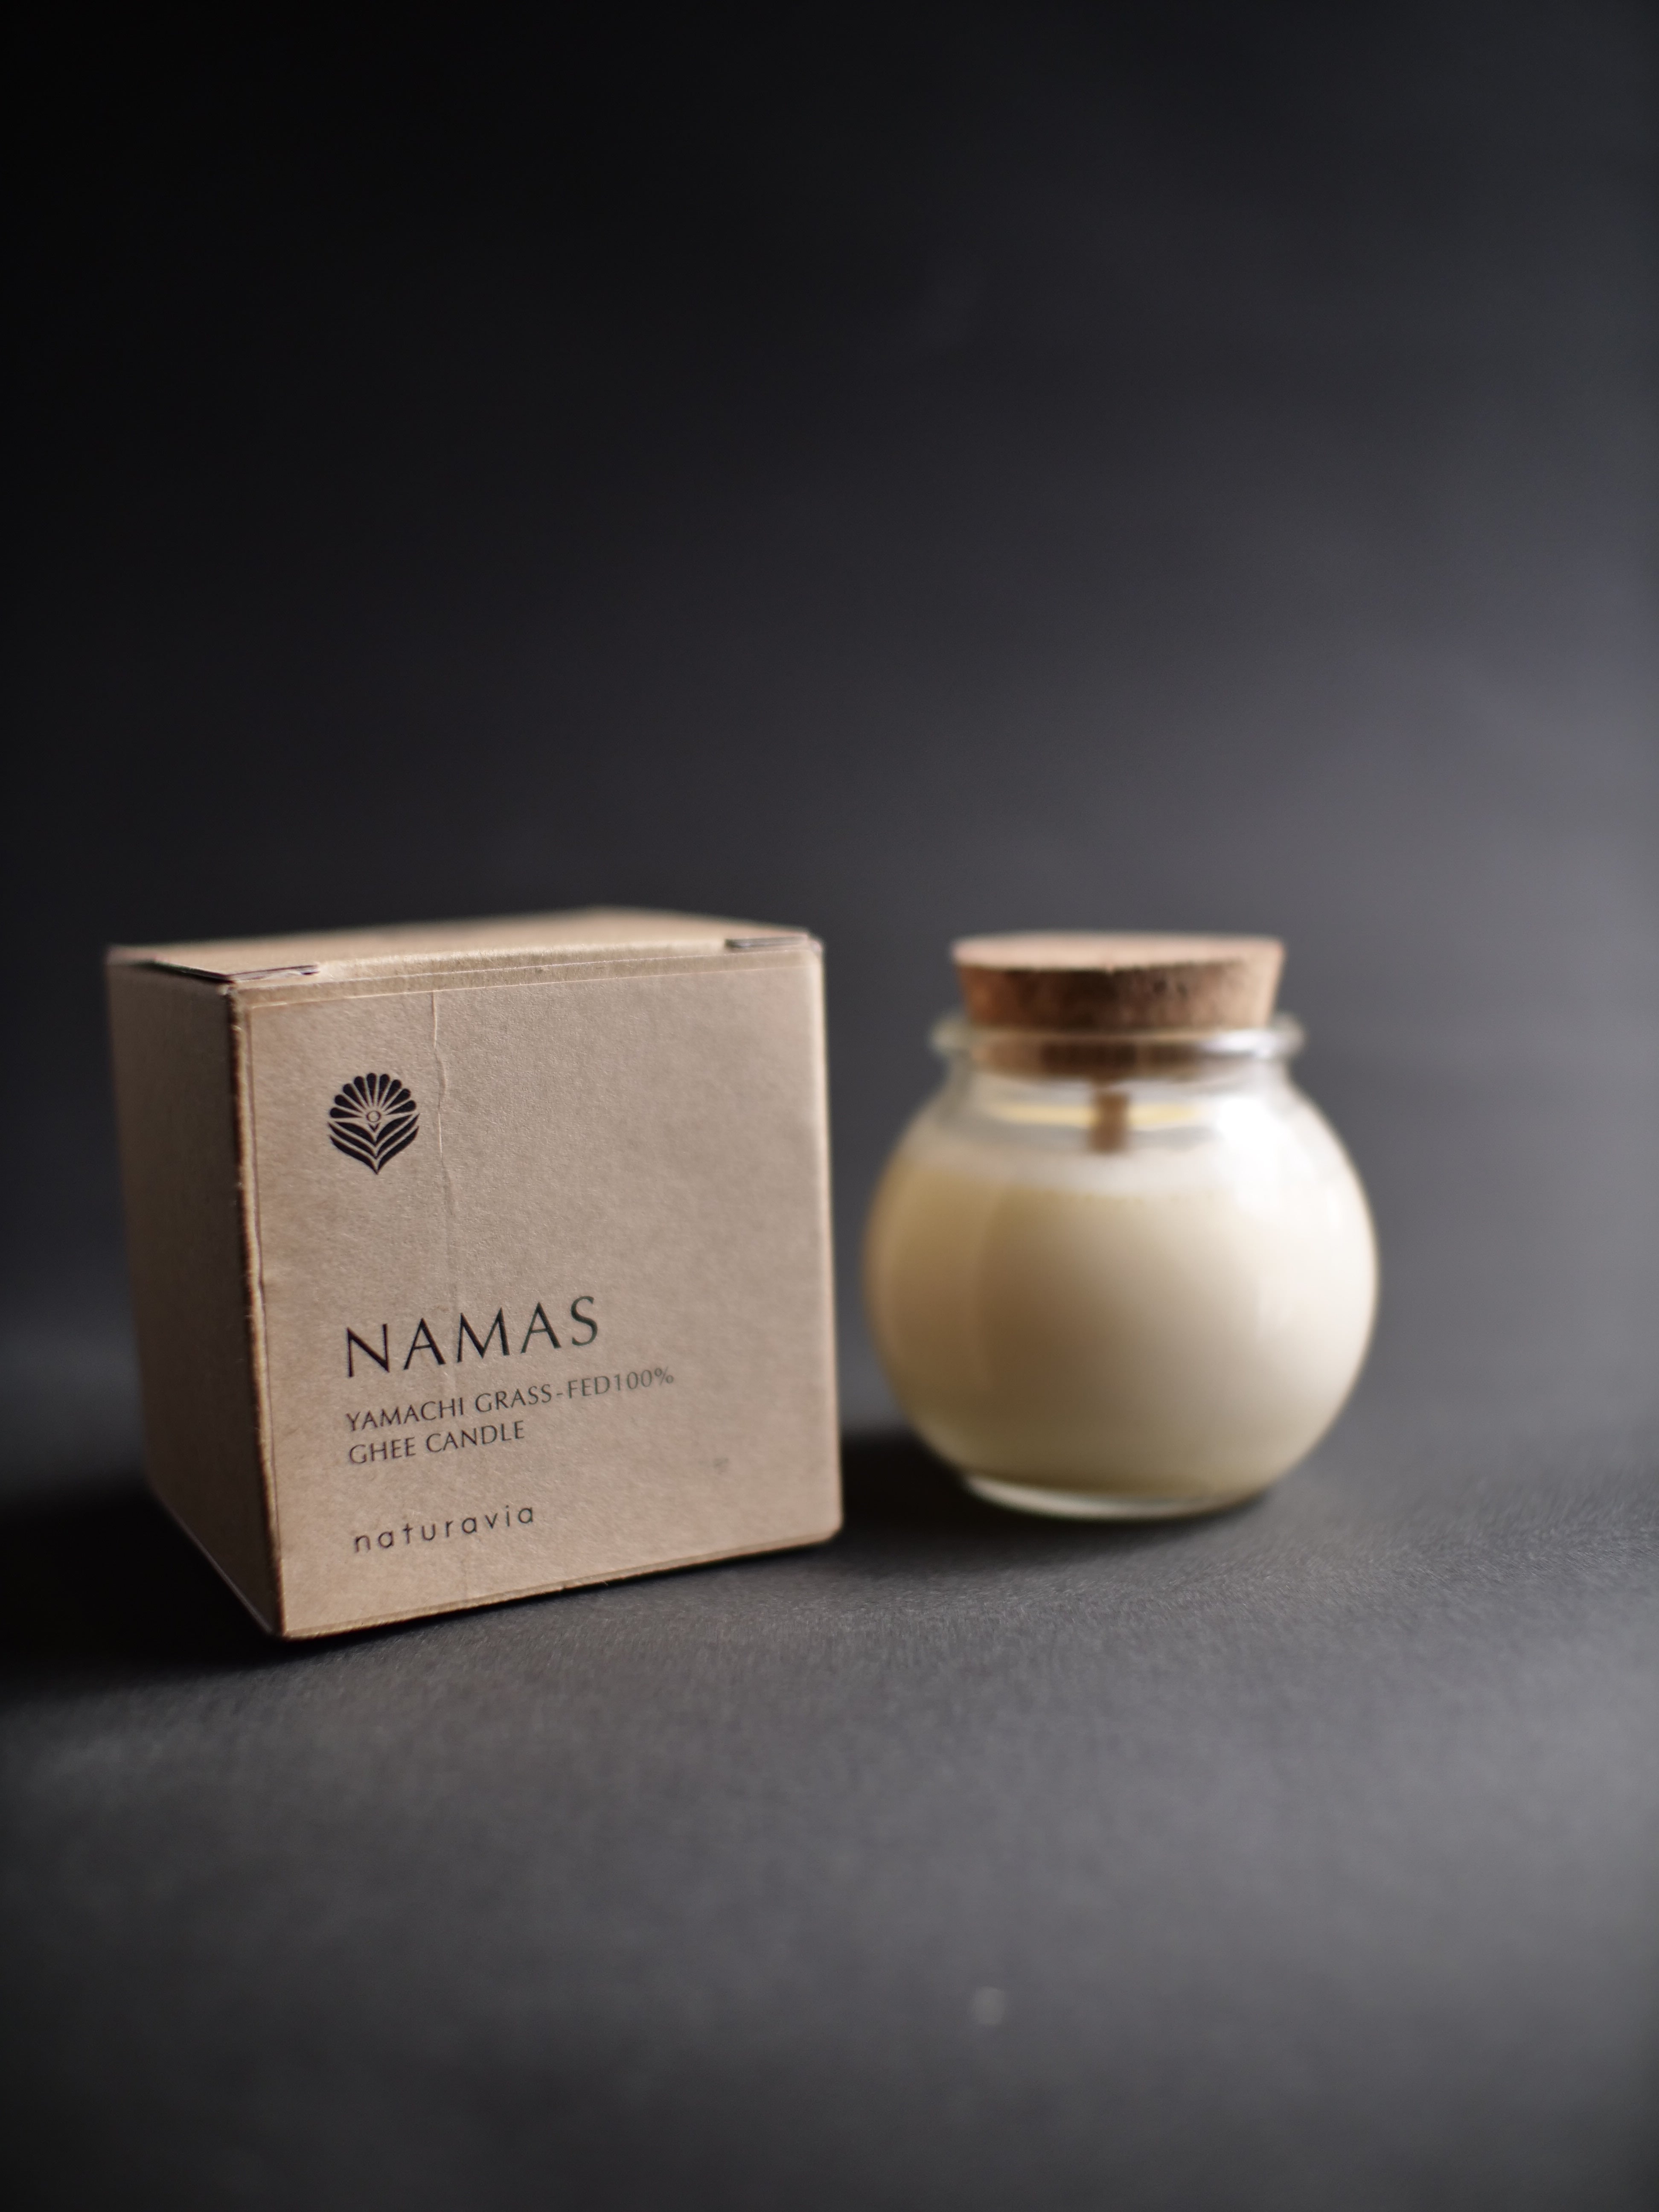 【NEW】NAMAS YAMACHI-GRASS-FED100% GHEE CANDLE[70g]